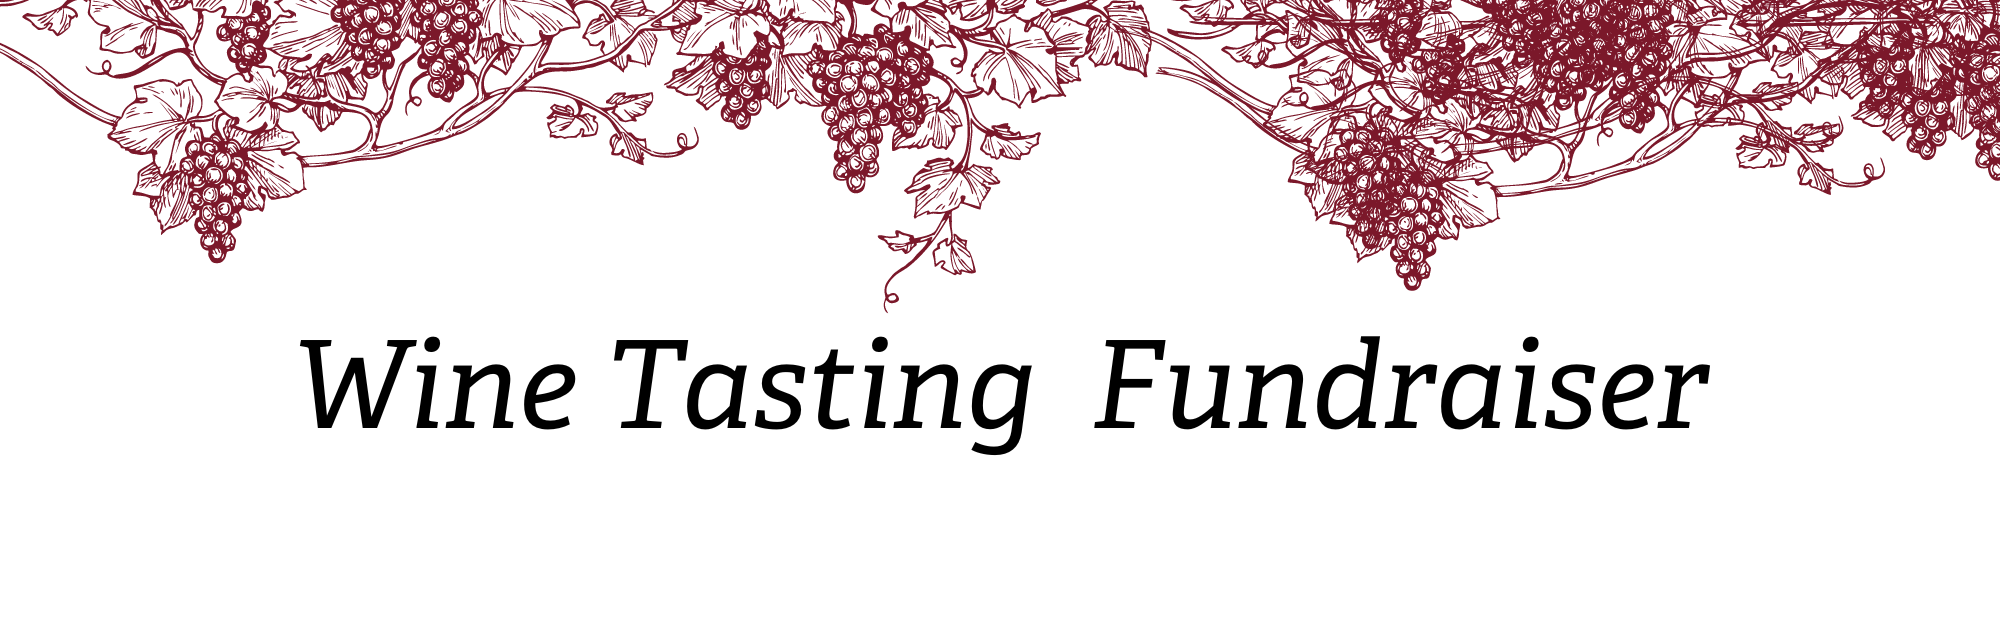 Wine Tasting Website Banner